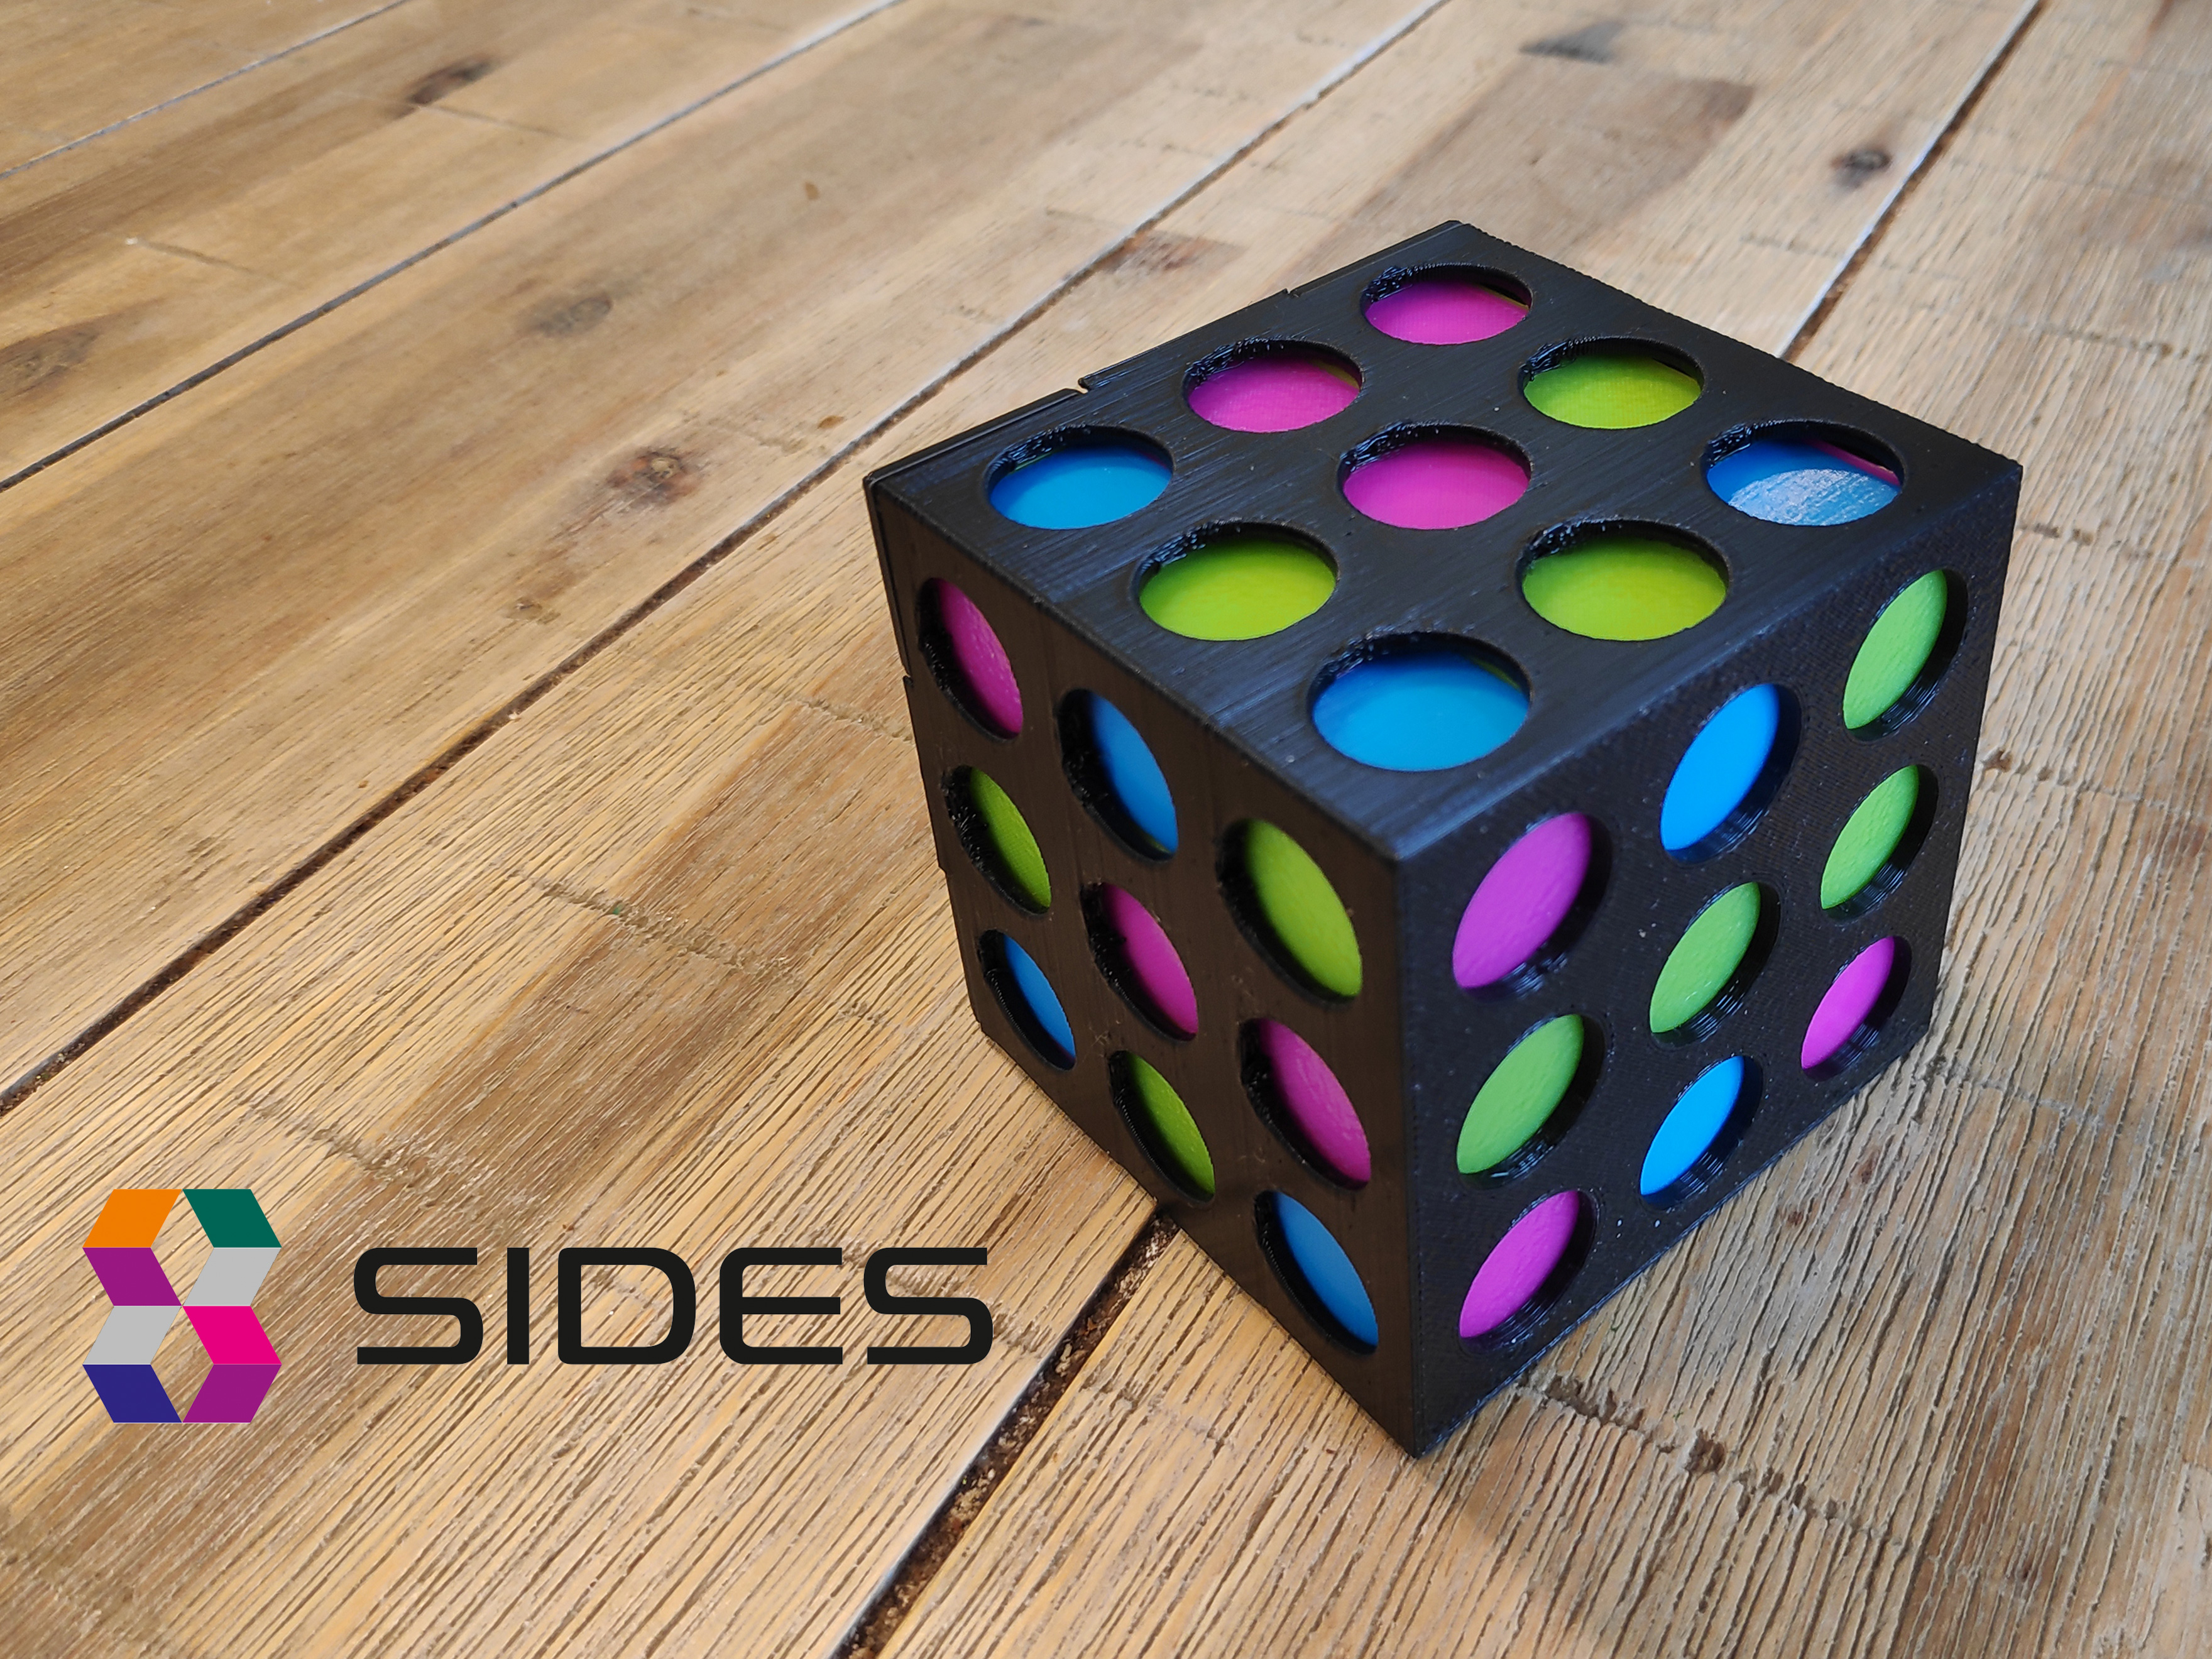 Tic Tac Sides 3D. A logical board game